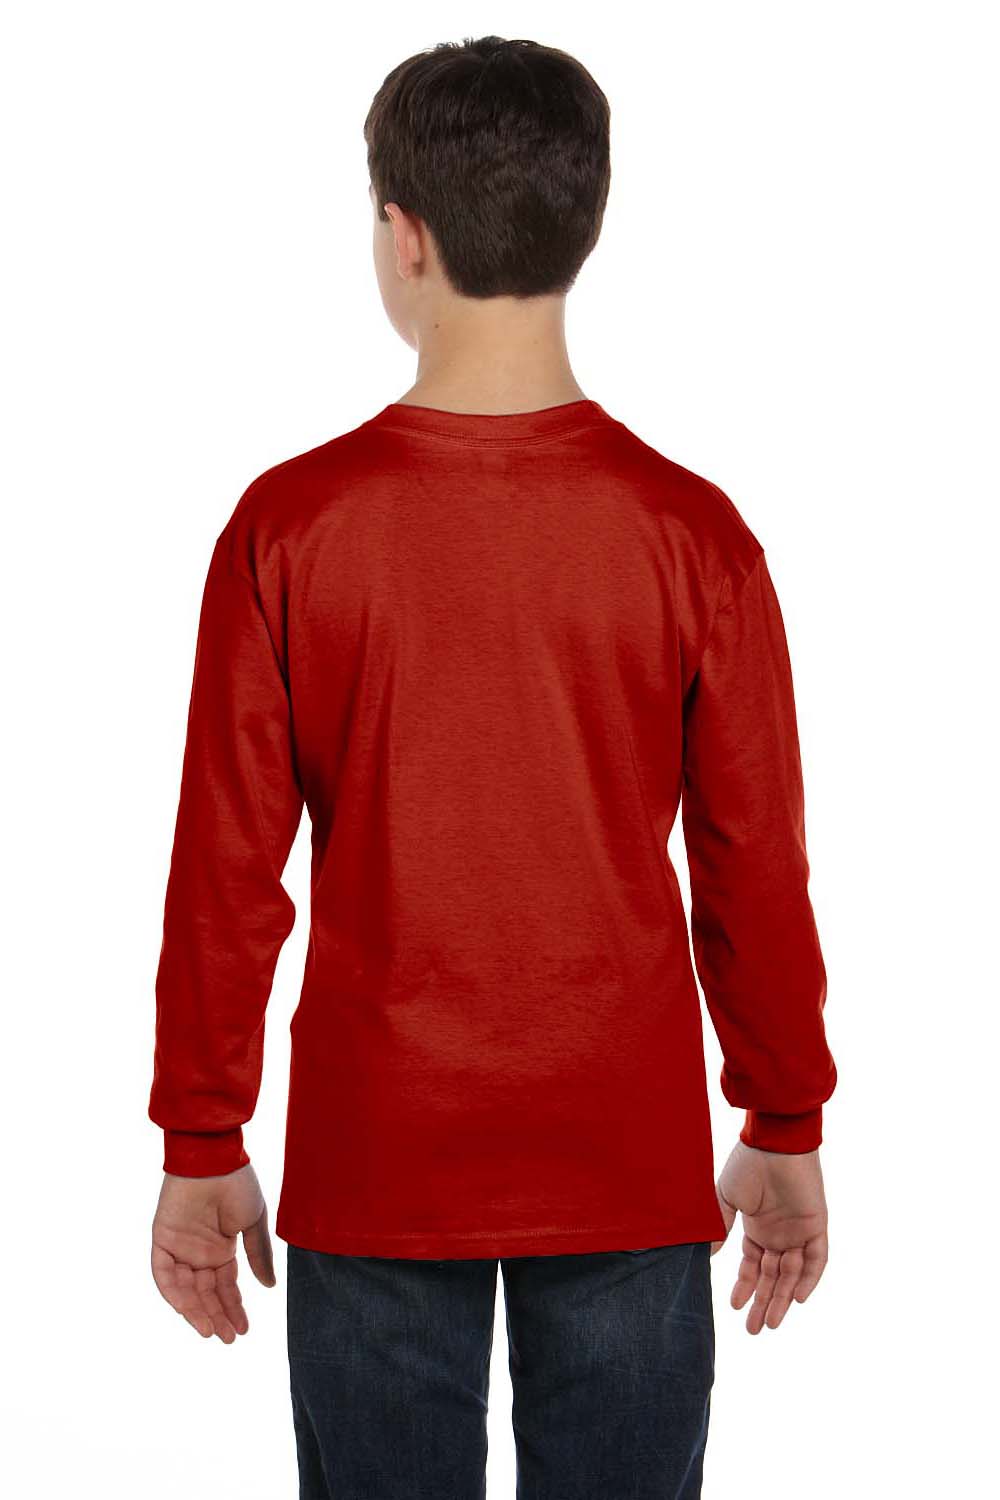 Hanes 5546 Youth ComfortSoft Long Sleeve Crewneck T-Shirt Red Back